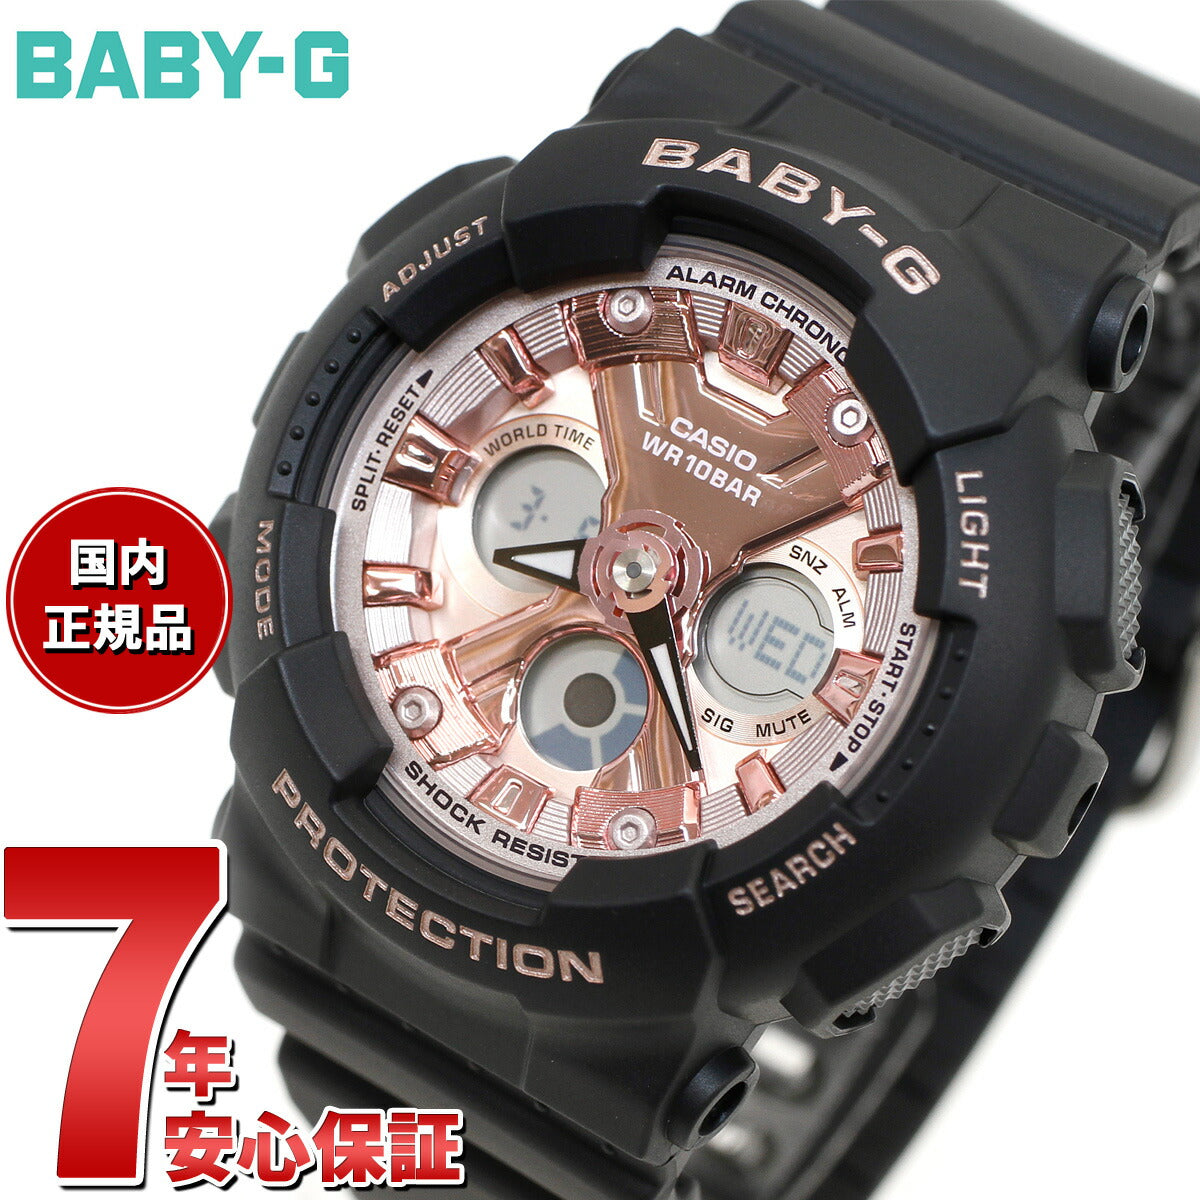 BABY-G カシオ ベビーG レディース 腕時計 BA-130-1A4JF